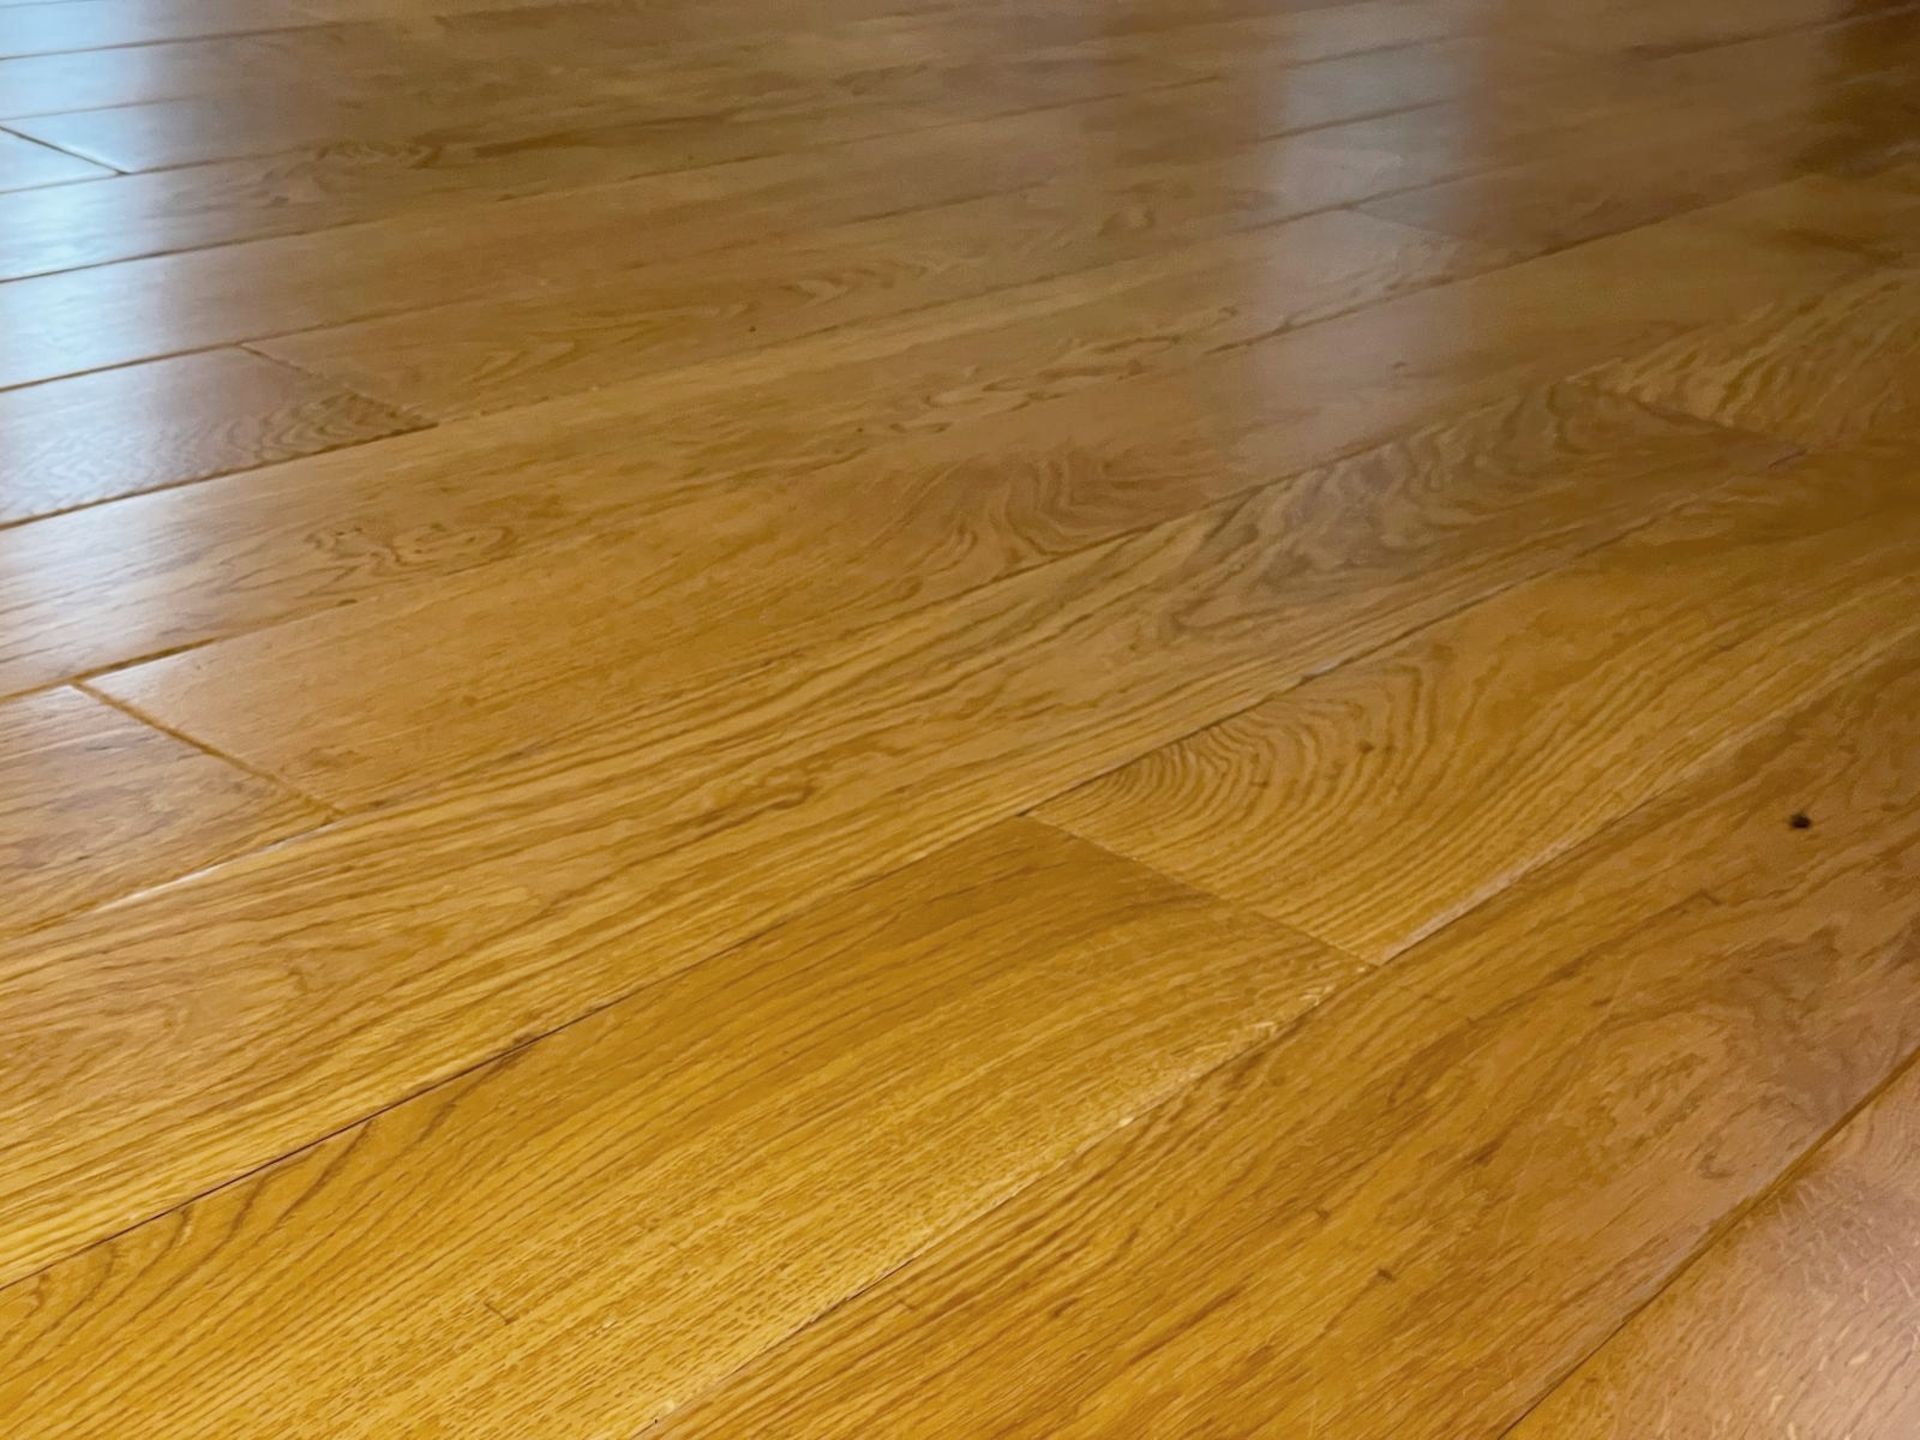 Large Area of Fine Oak Hardwood Flooring - 8.8 x 6.5 Metres - NO VAT ON THE HAMMER - Image 6 of 6